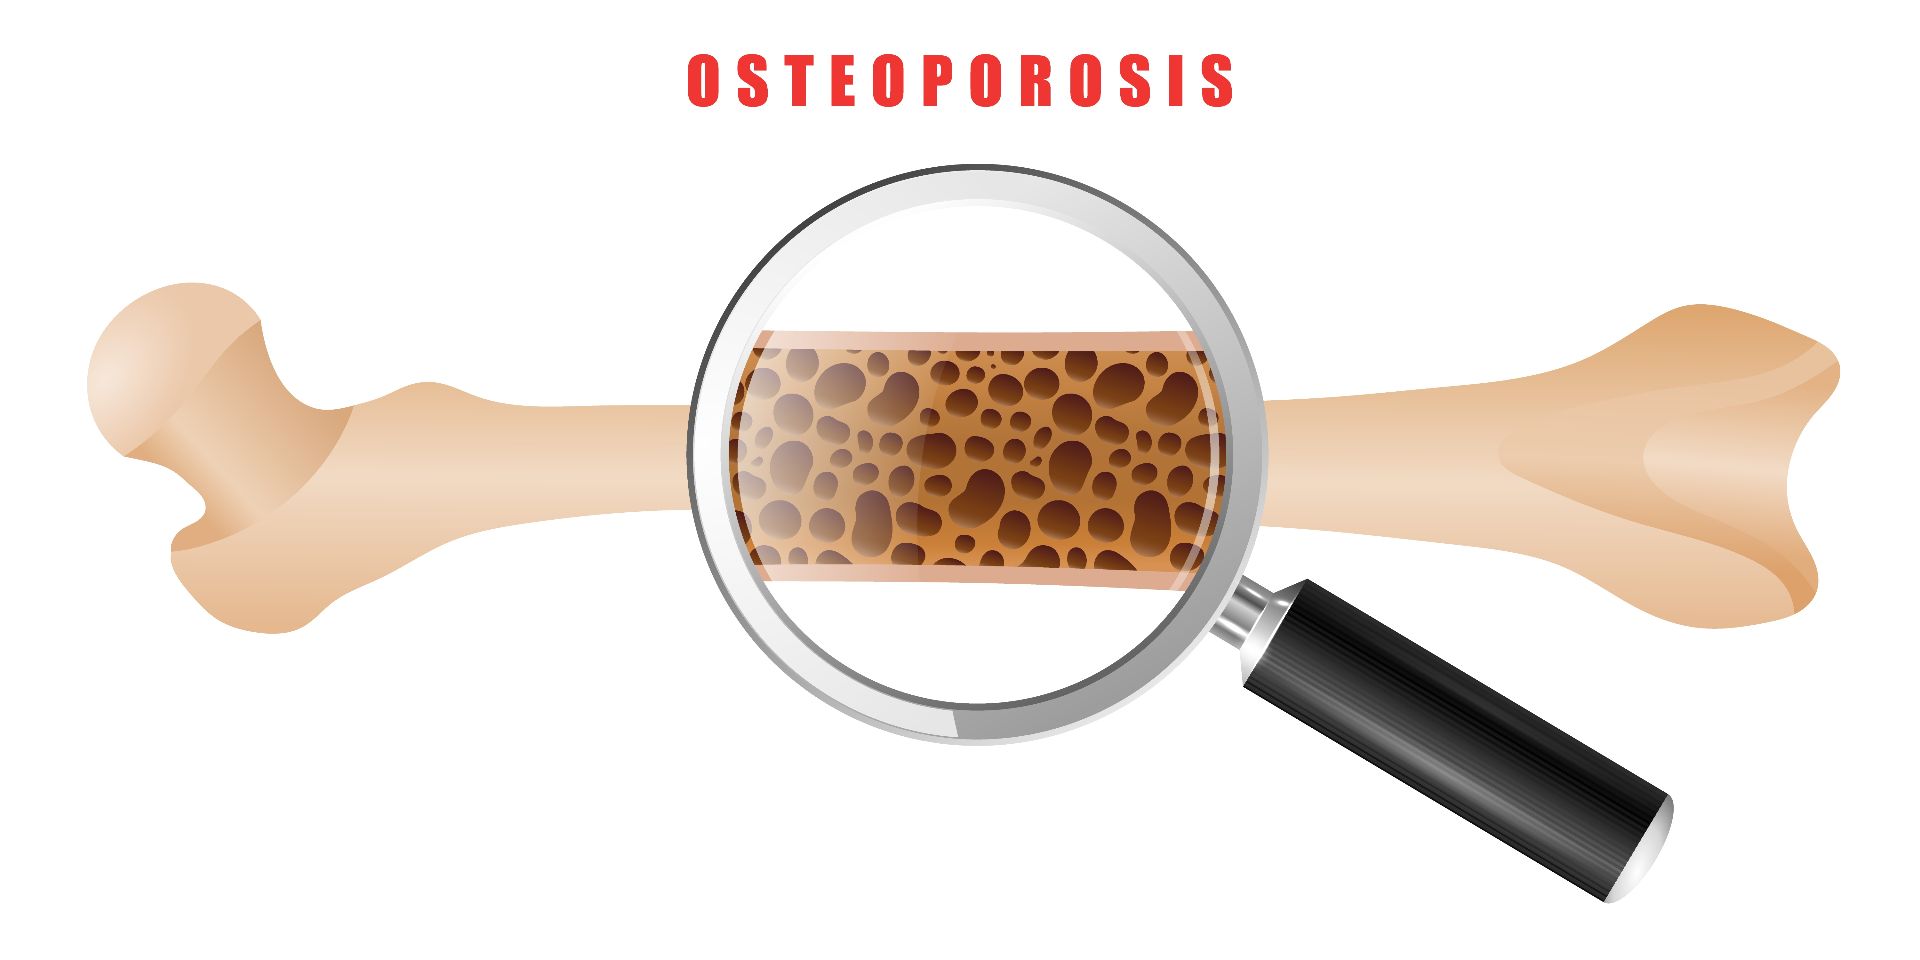 Studiu: asocierea cu osteoporoza depinde de doza de statine